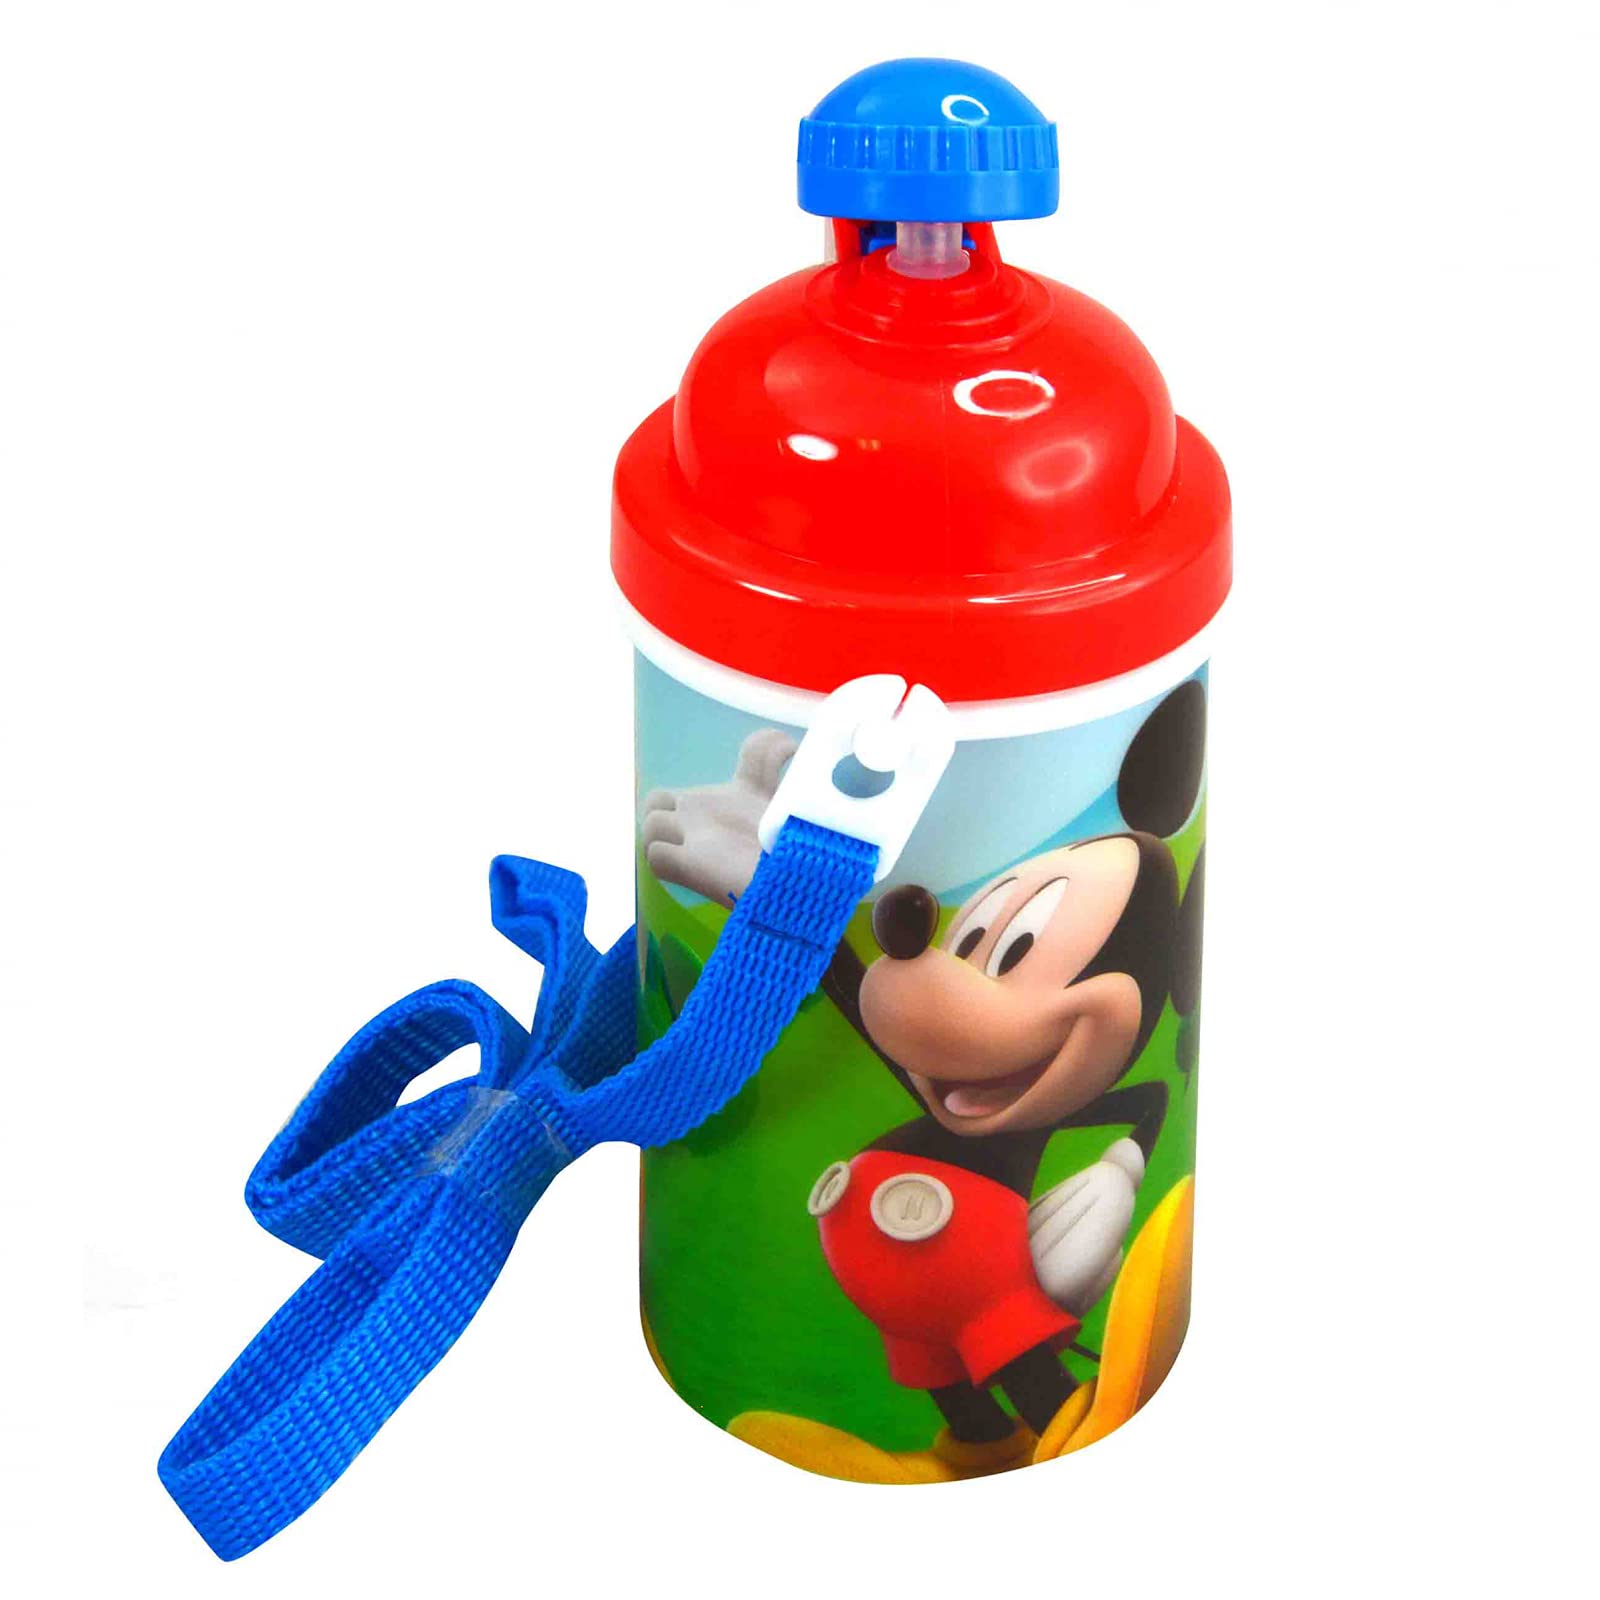 Disney BPA Free Safe Leakproof Cartoon Kids Water Bottles